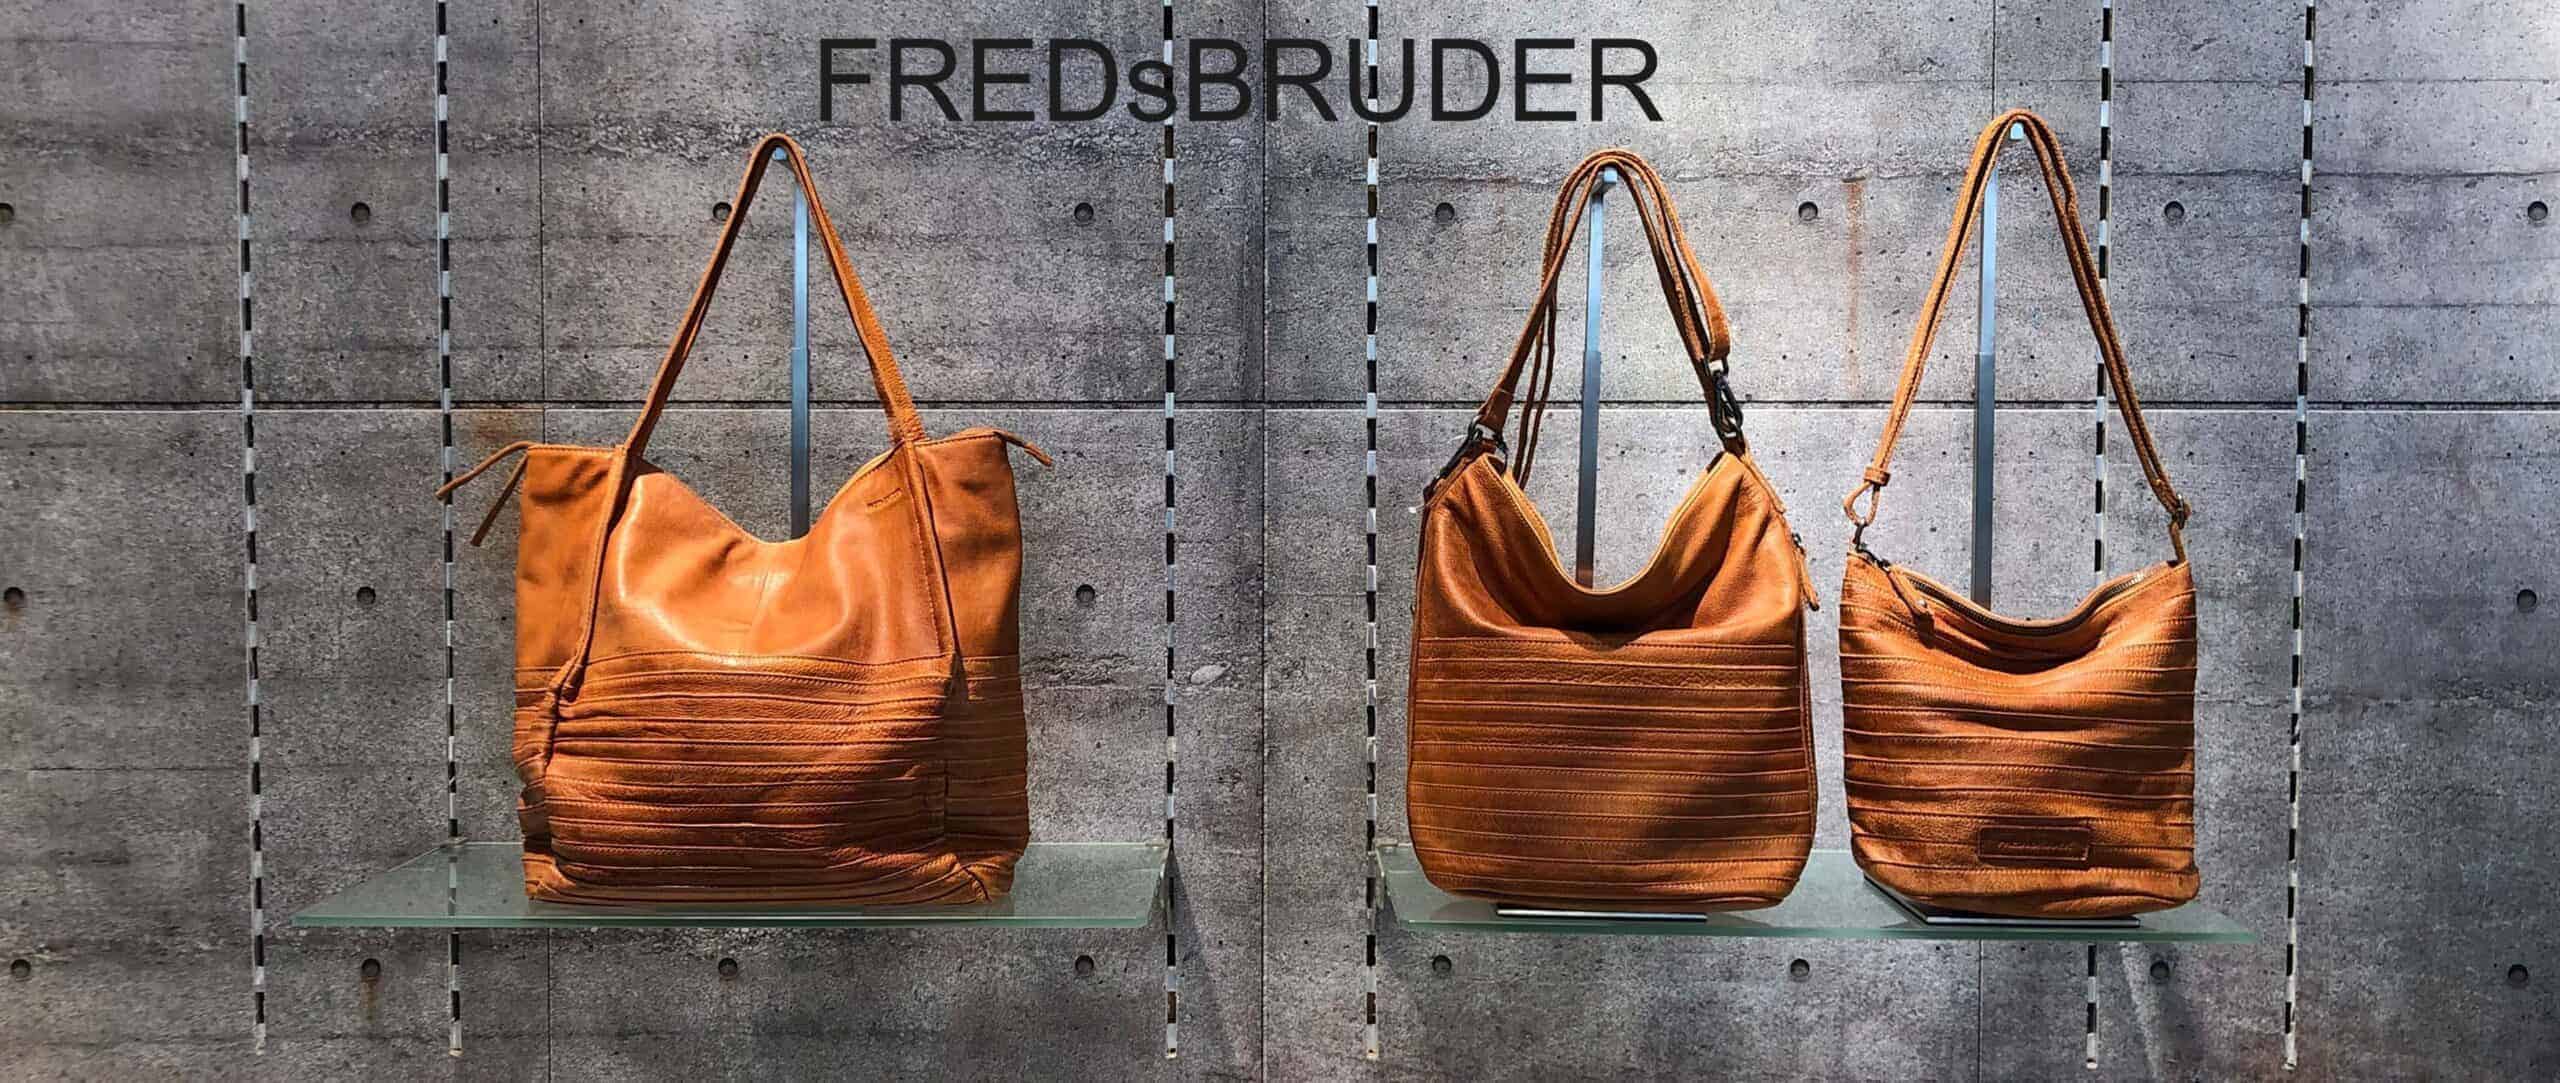 Leder - Fuchs FredsBruder